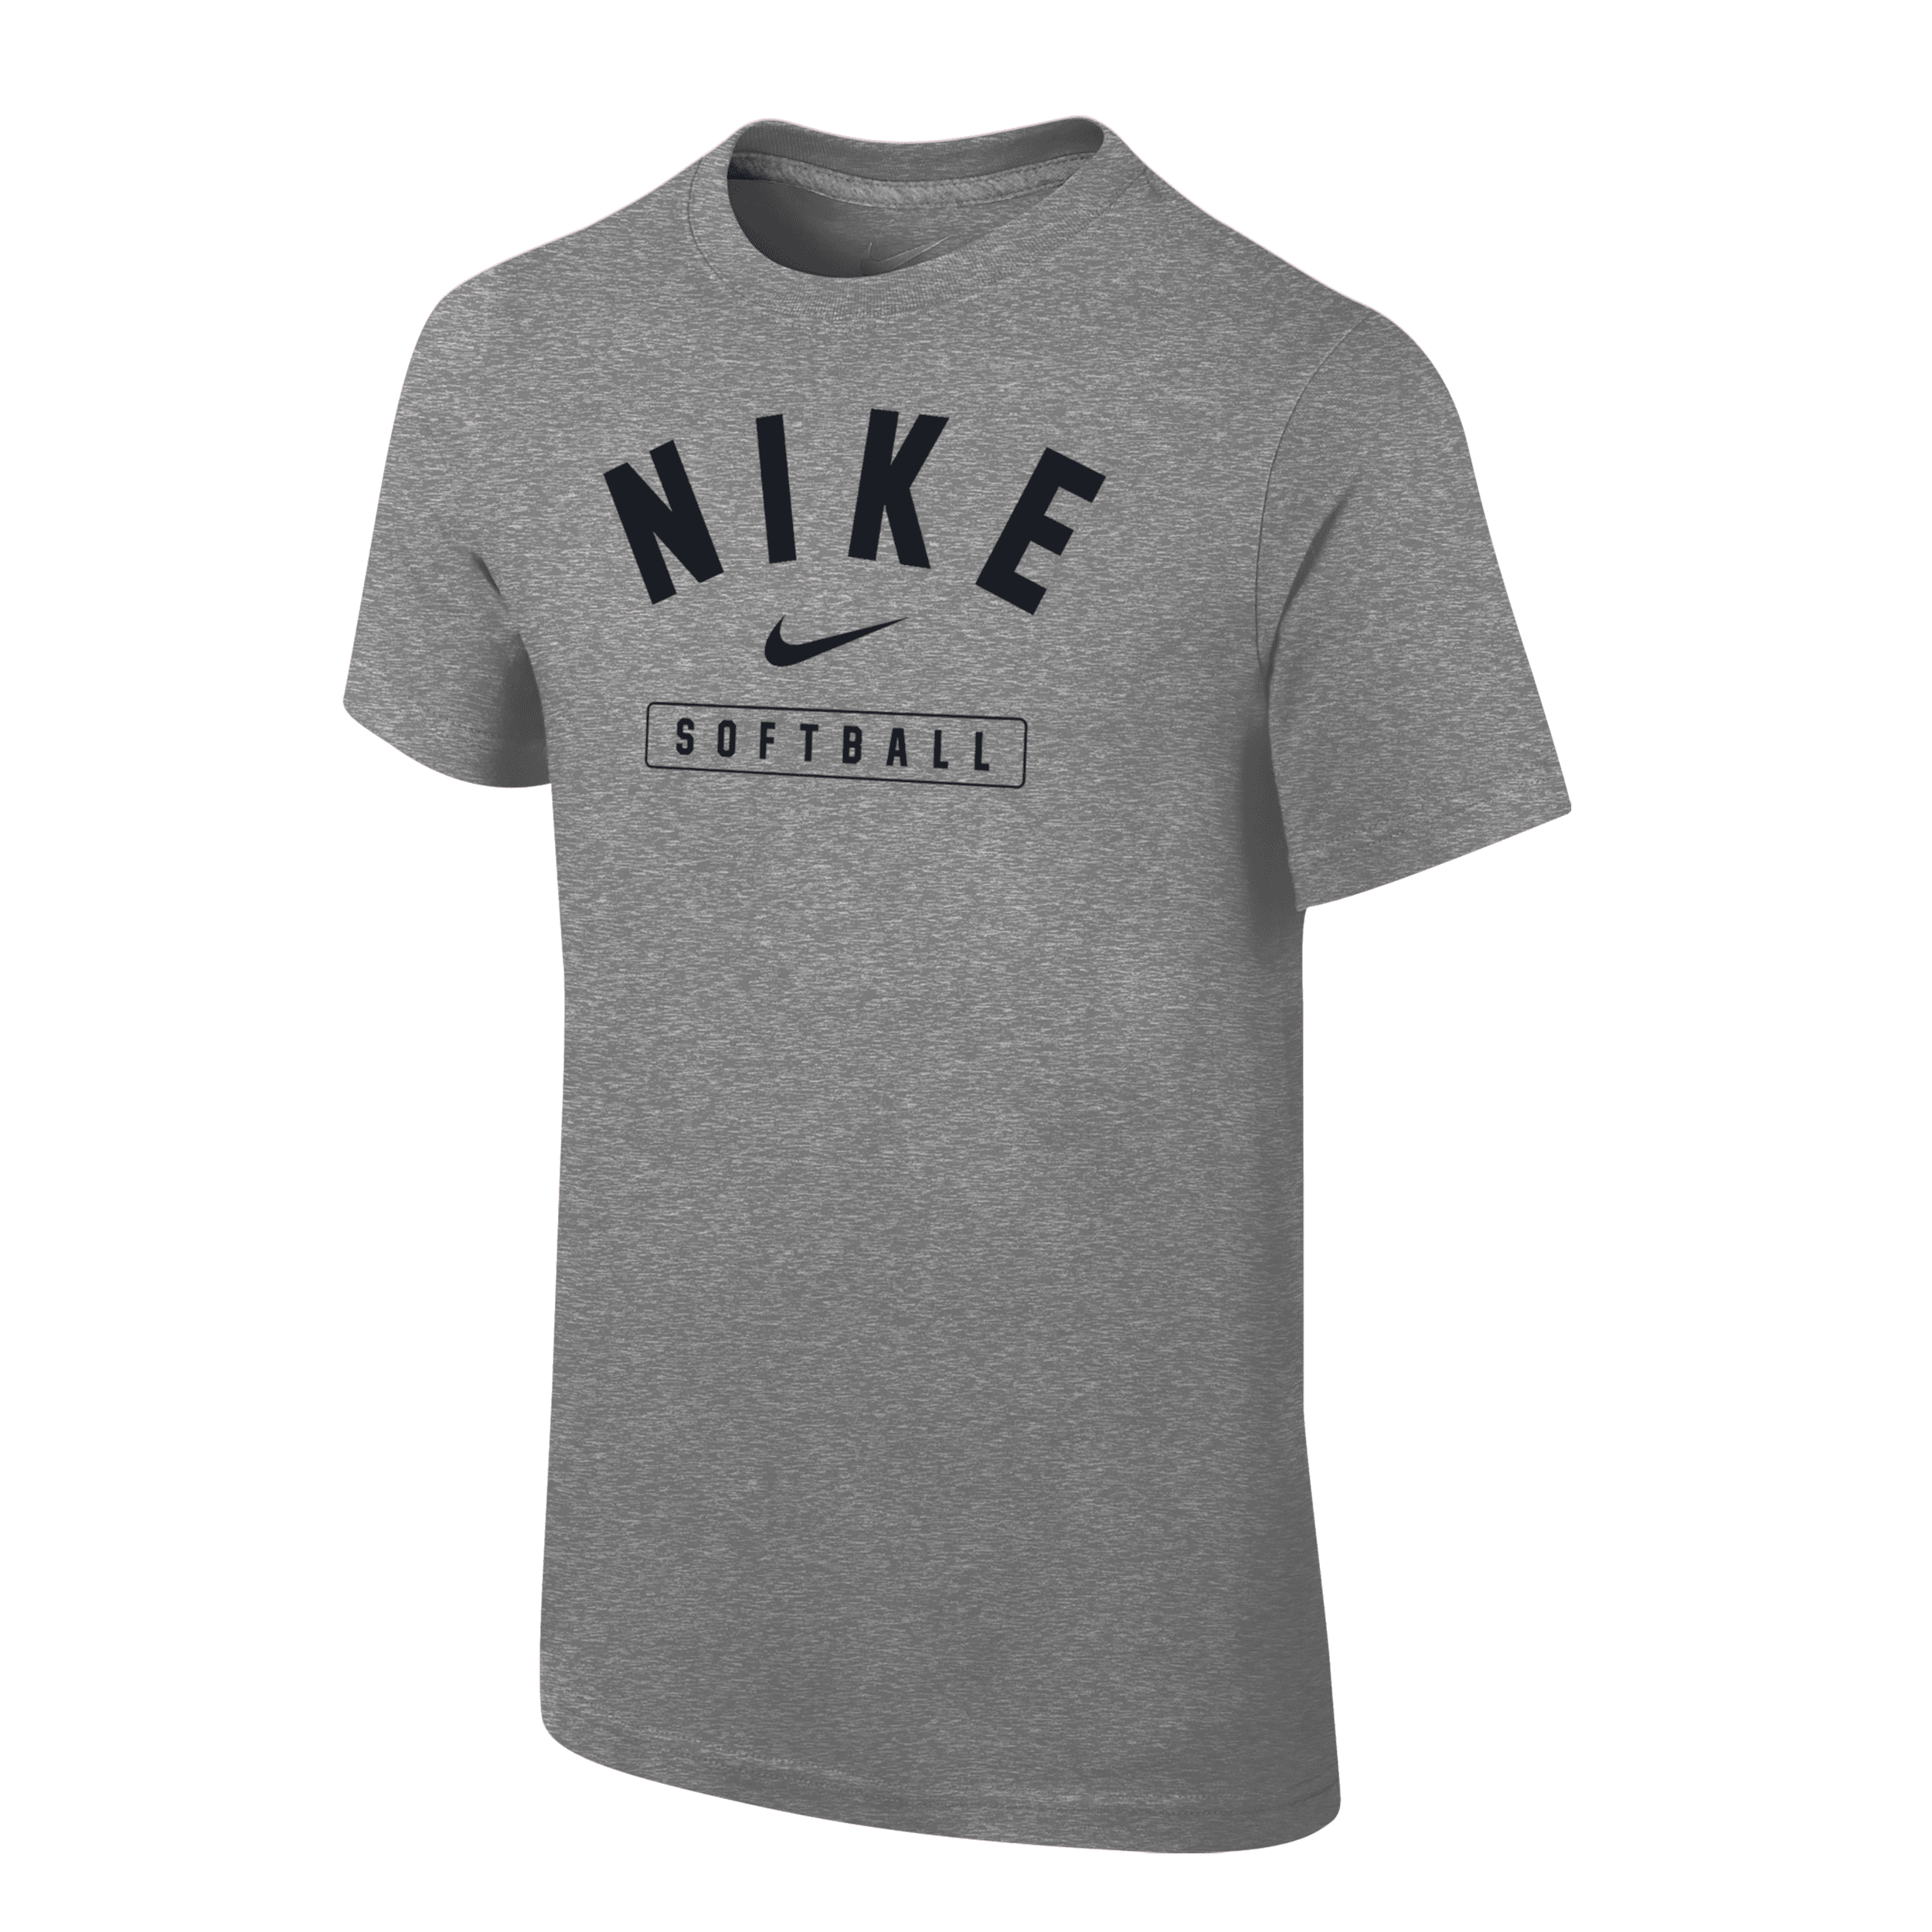 Nike Big Kids' Softball T-shirt In Grey